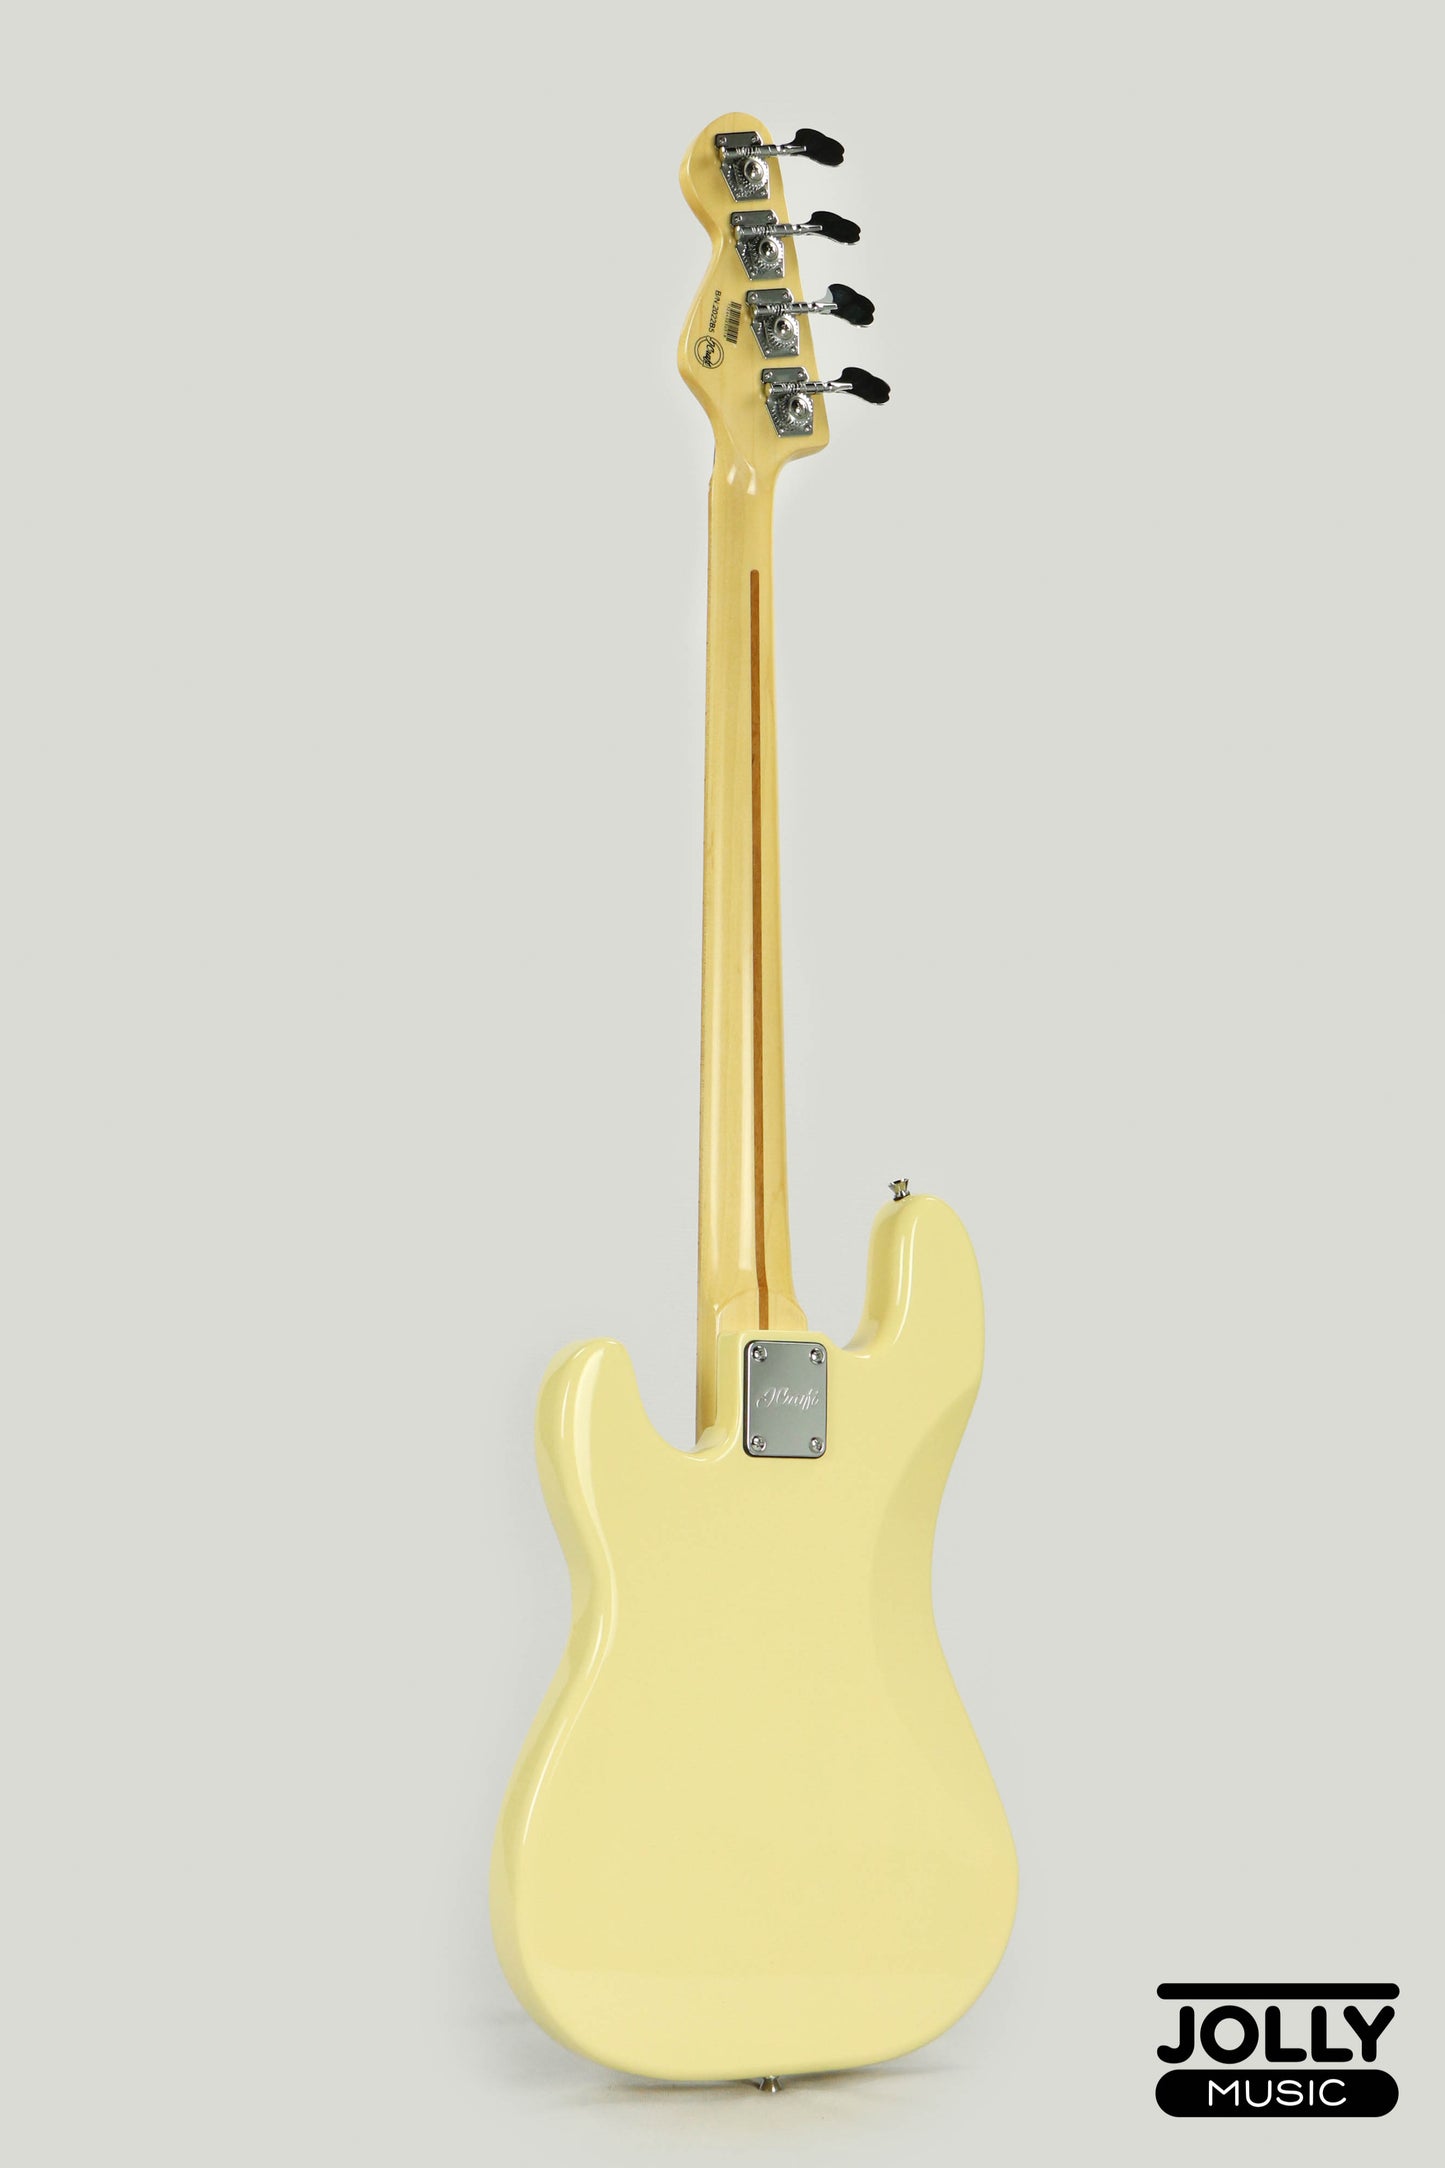 JCraft PB-2 4-String Bass Guitar - Milky White